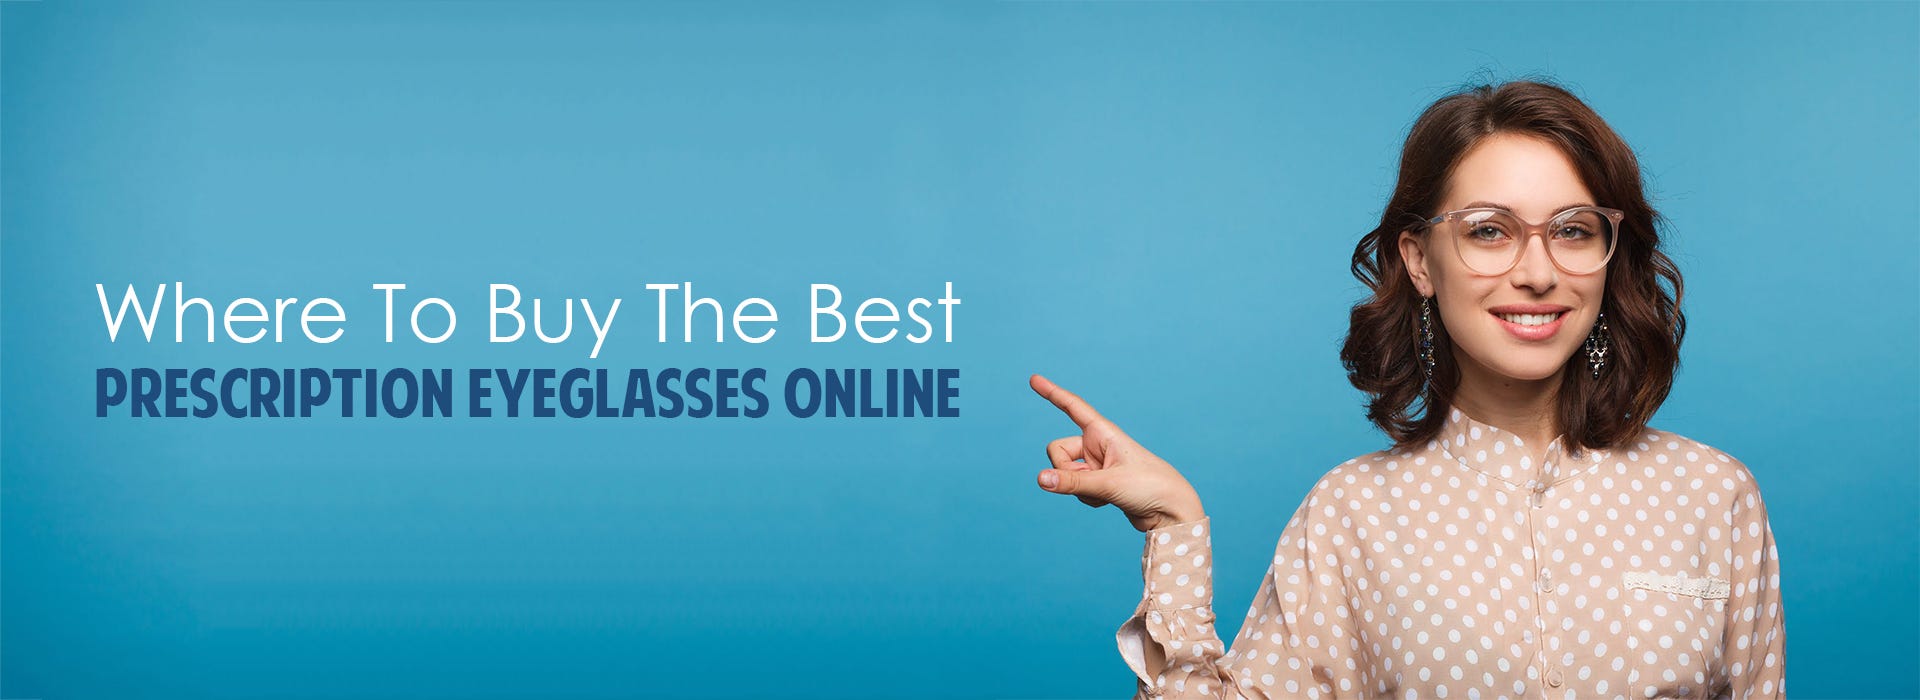 Where To Find The Best Prescription Eyeglasses Online